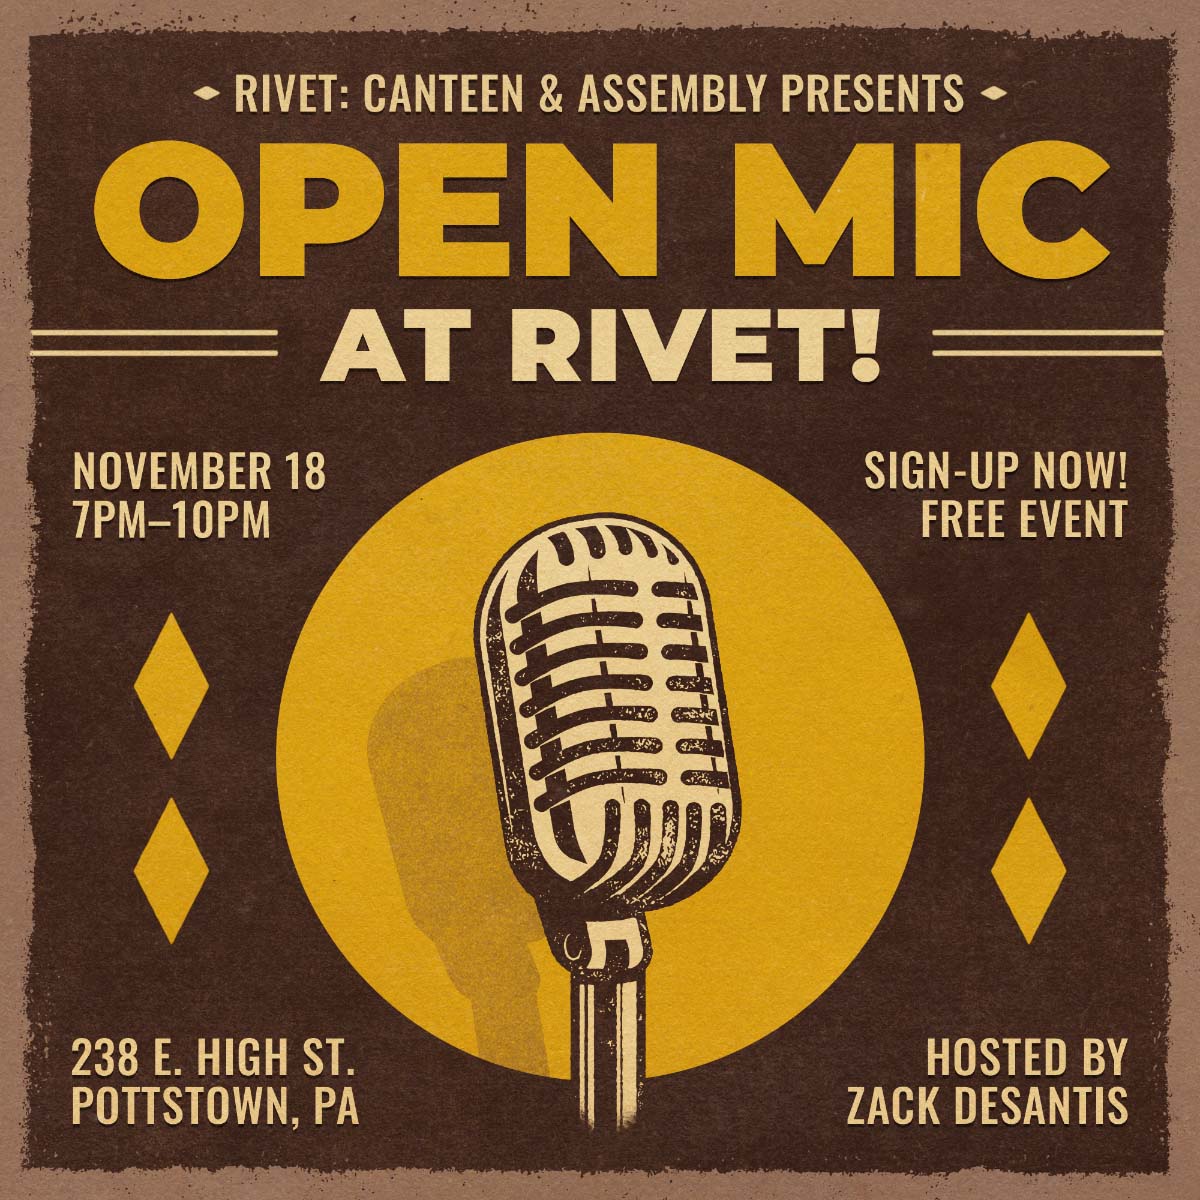 Open Mic night at Rivet: Canteen & Assembly on Thursday, November 18th, 2021 in Pottstown, Pennsylvania